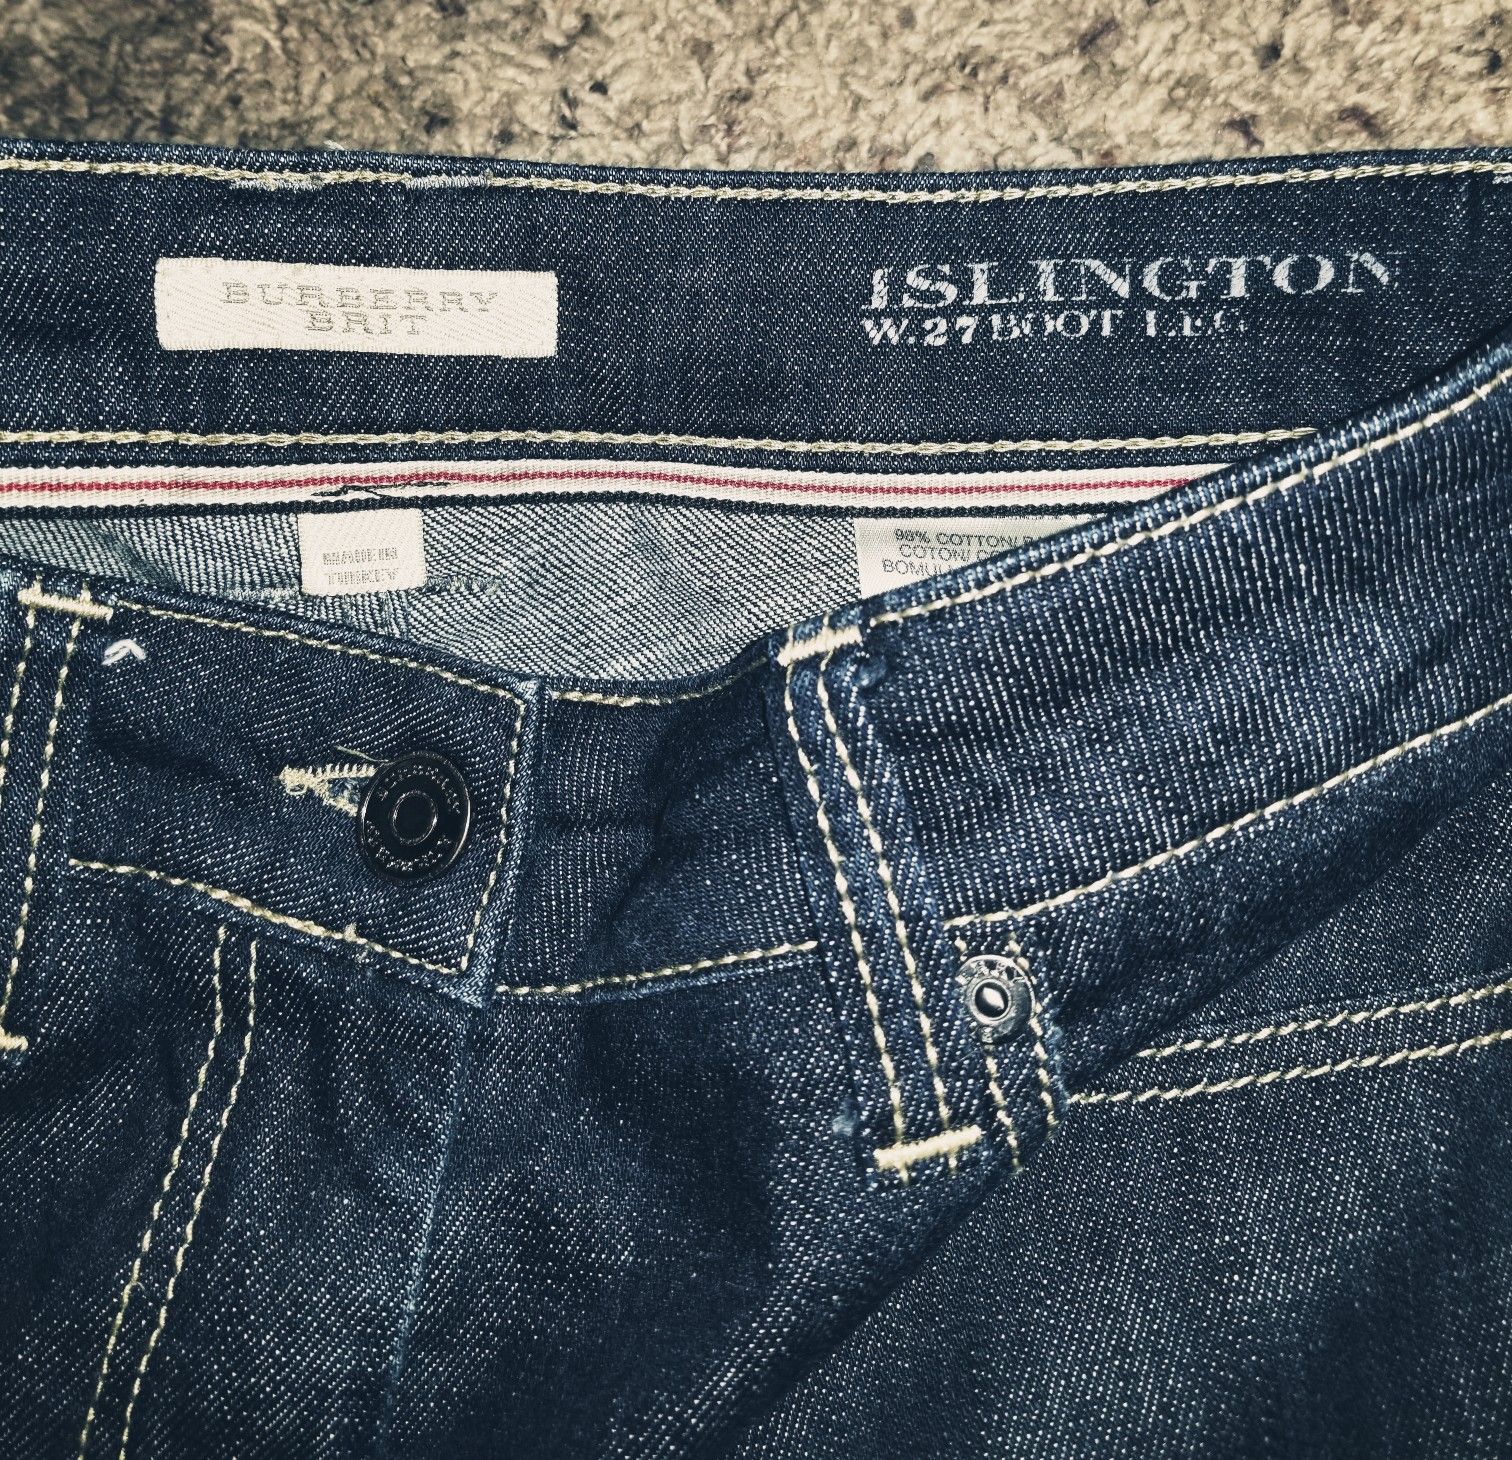 Burberry Brit Islington jeans